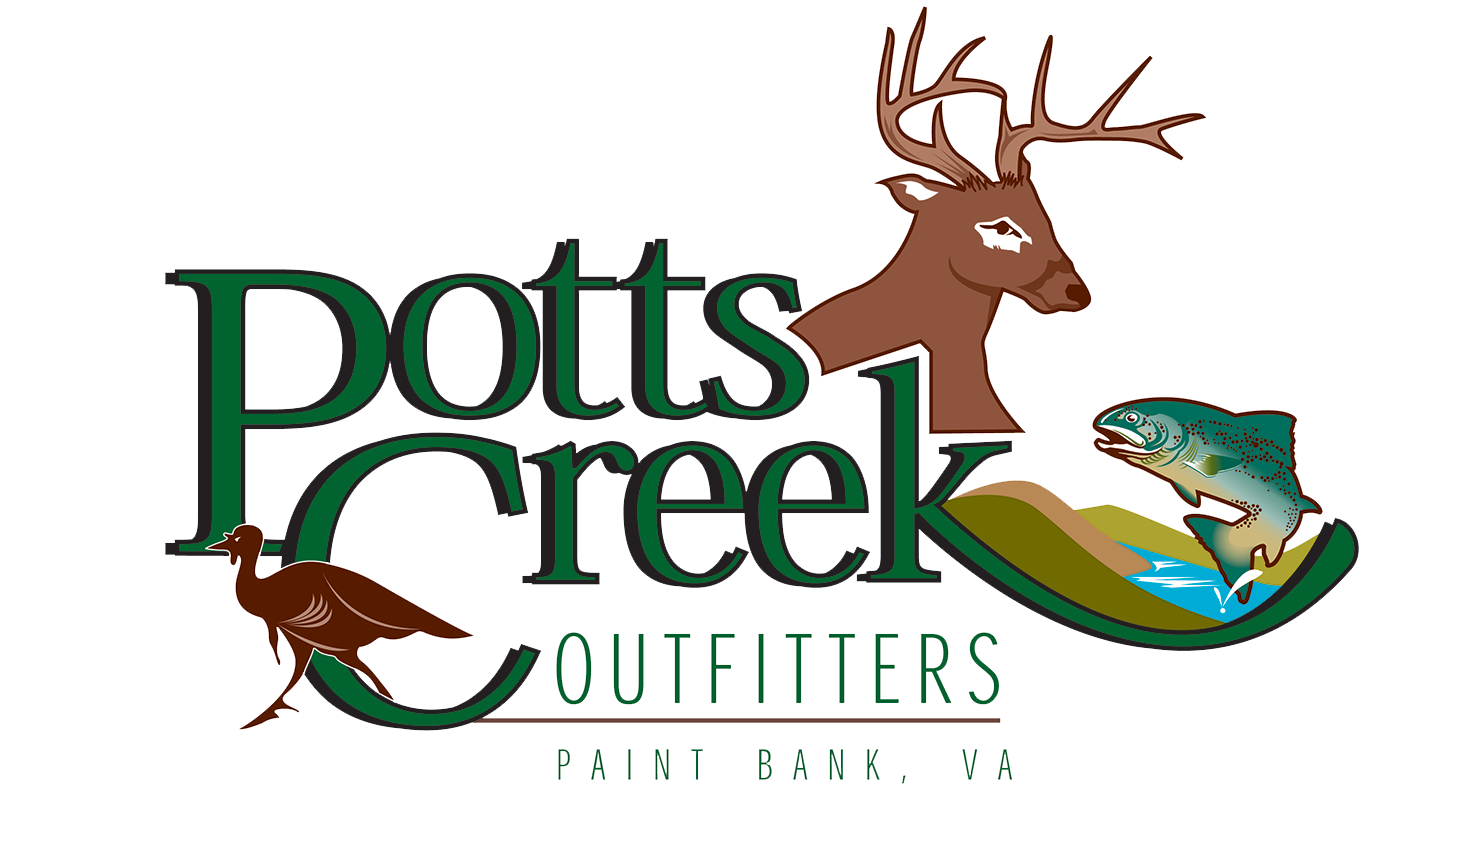 Potts_Creek-logo.png